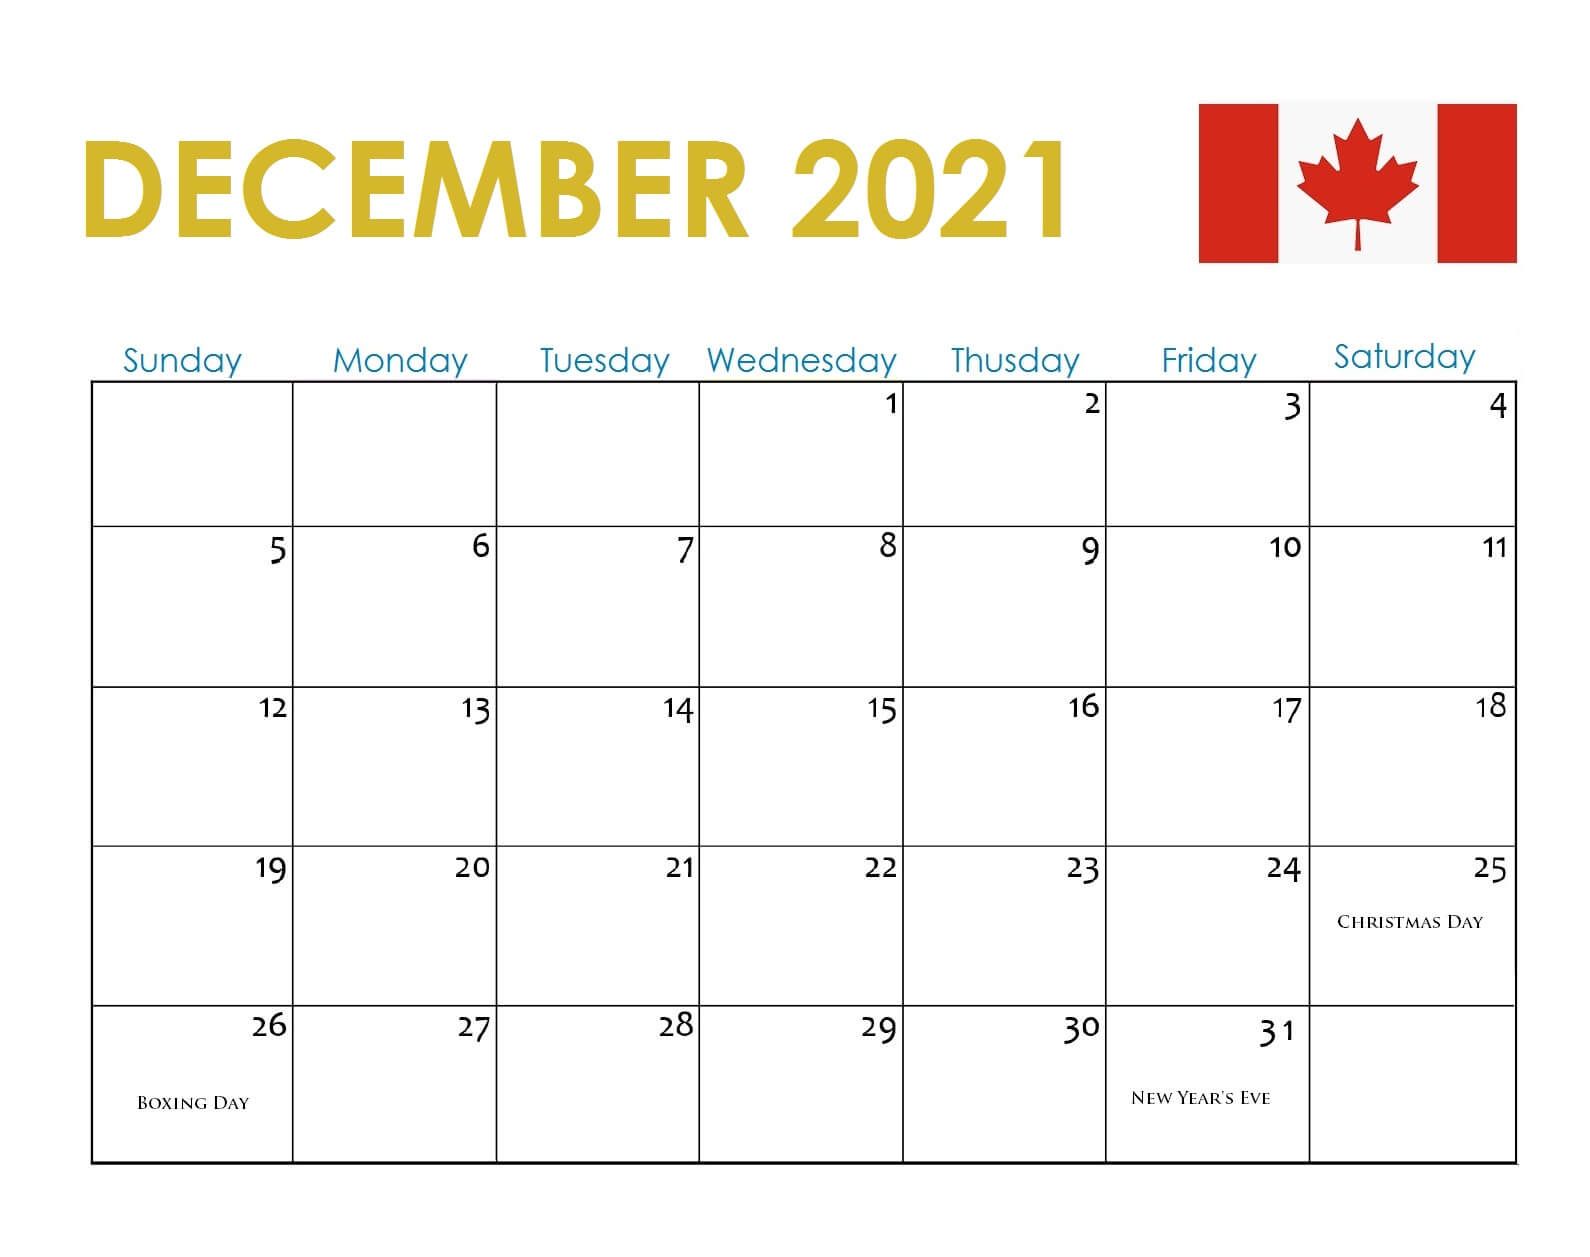 December 2021 Holidays In Us